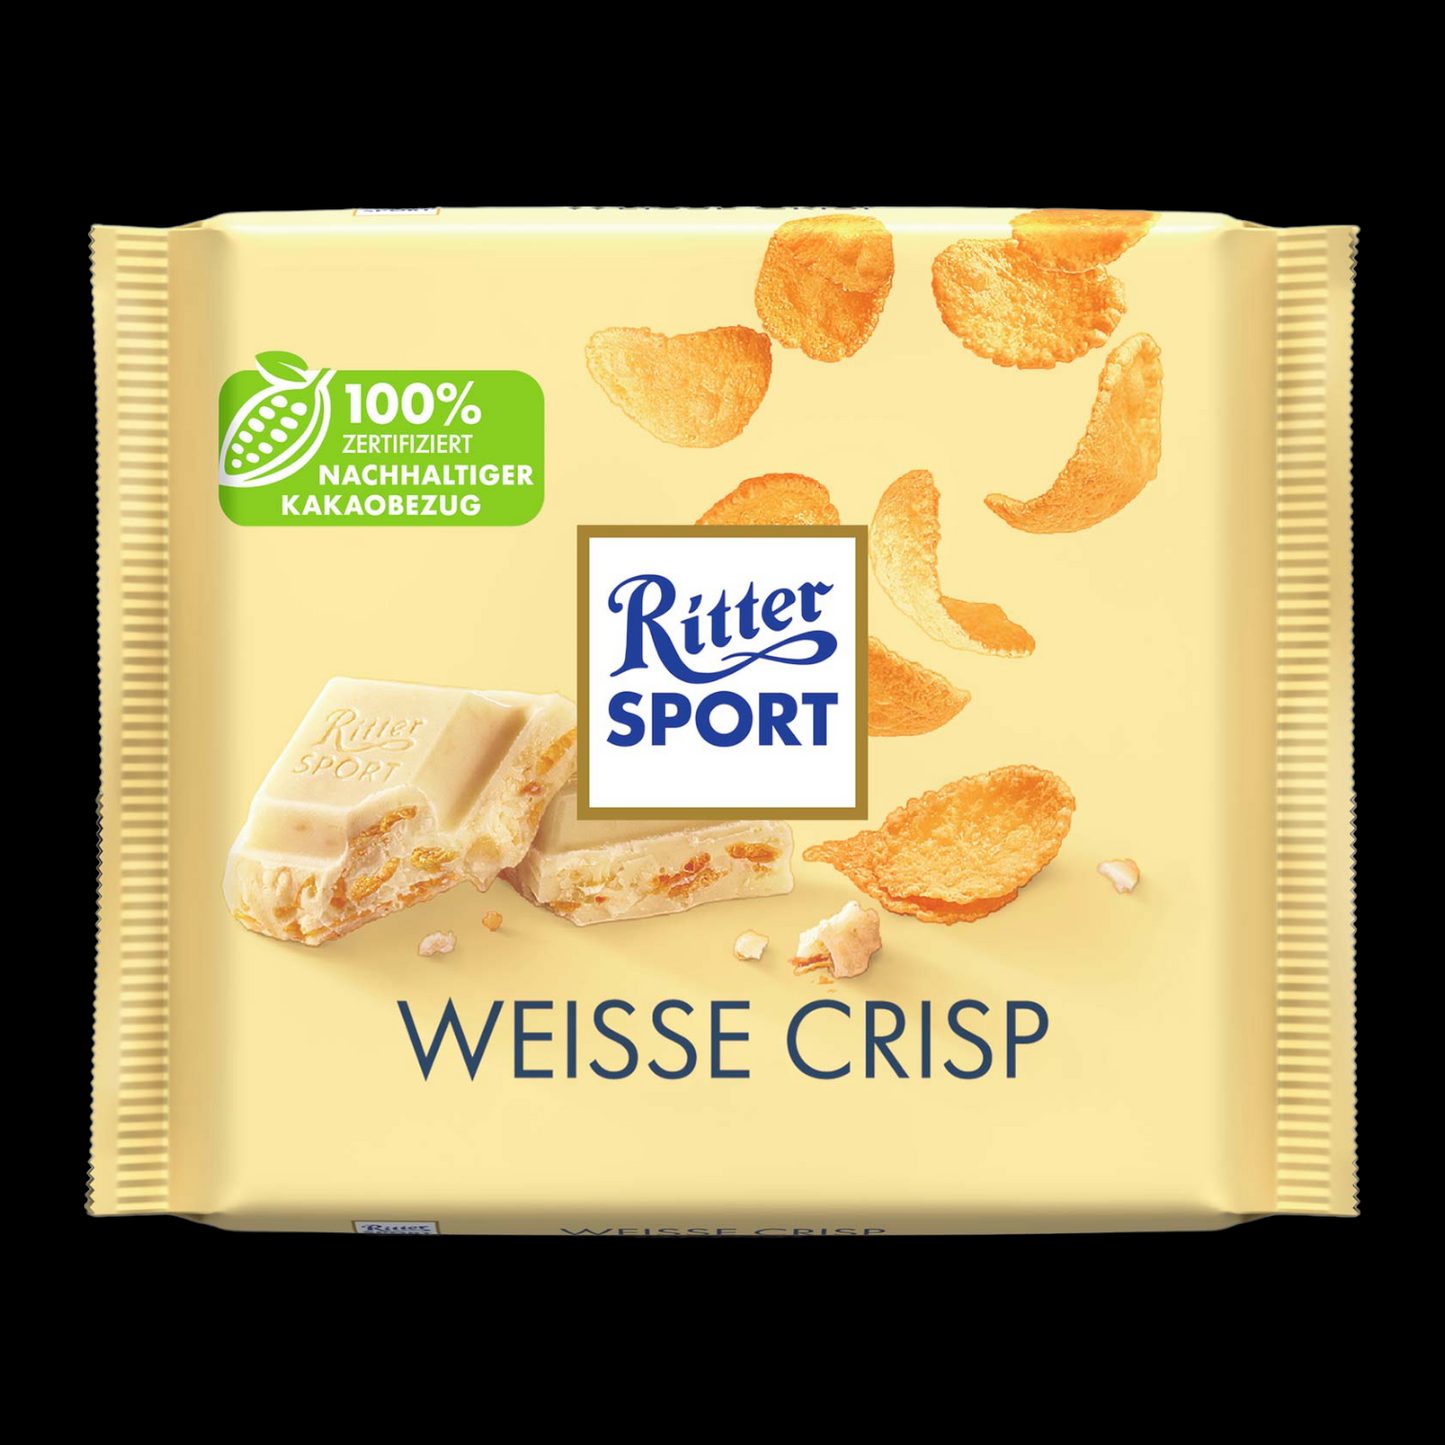 Ritter Sport King Size Weisse Crisp 250g